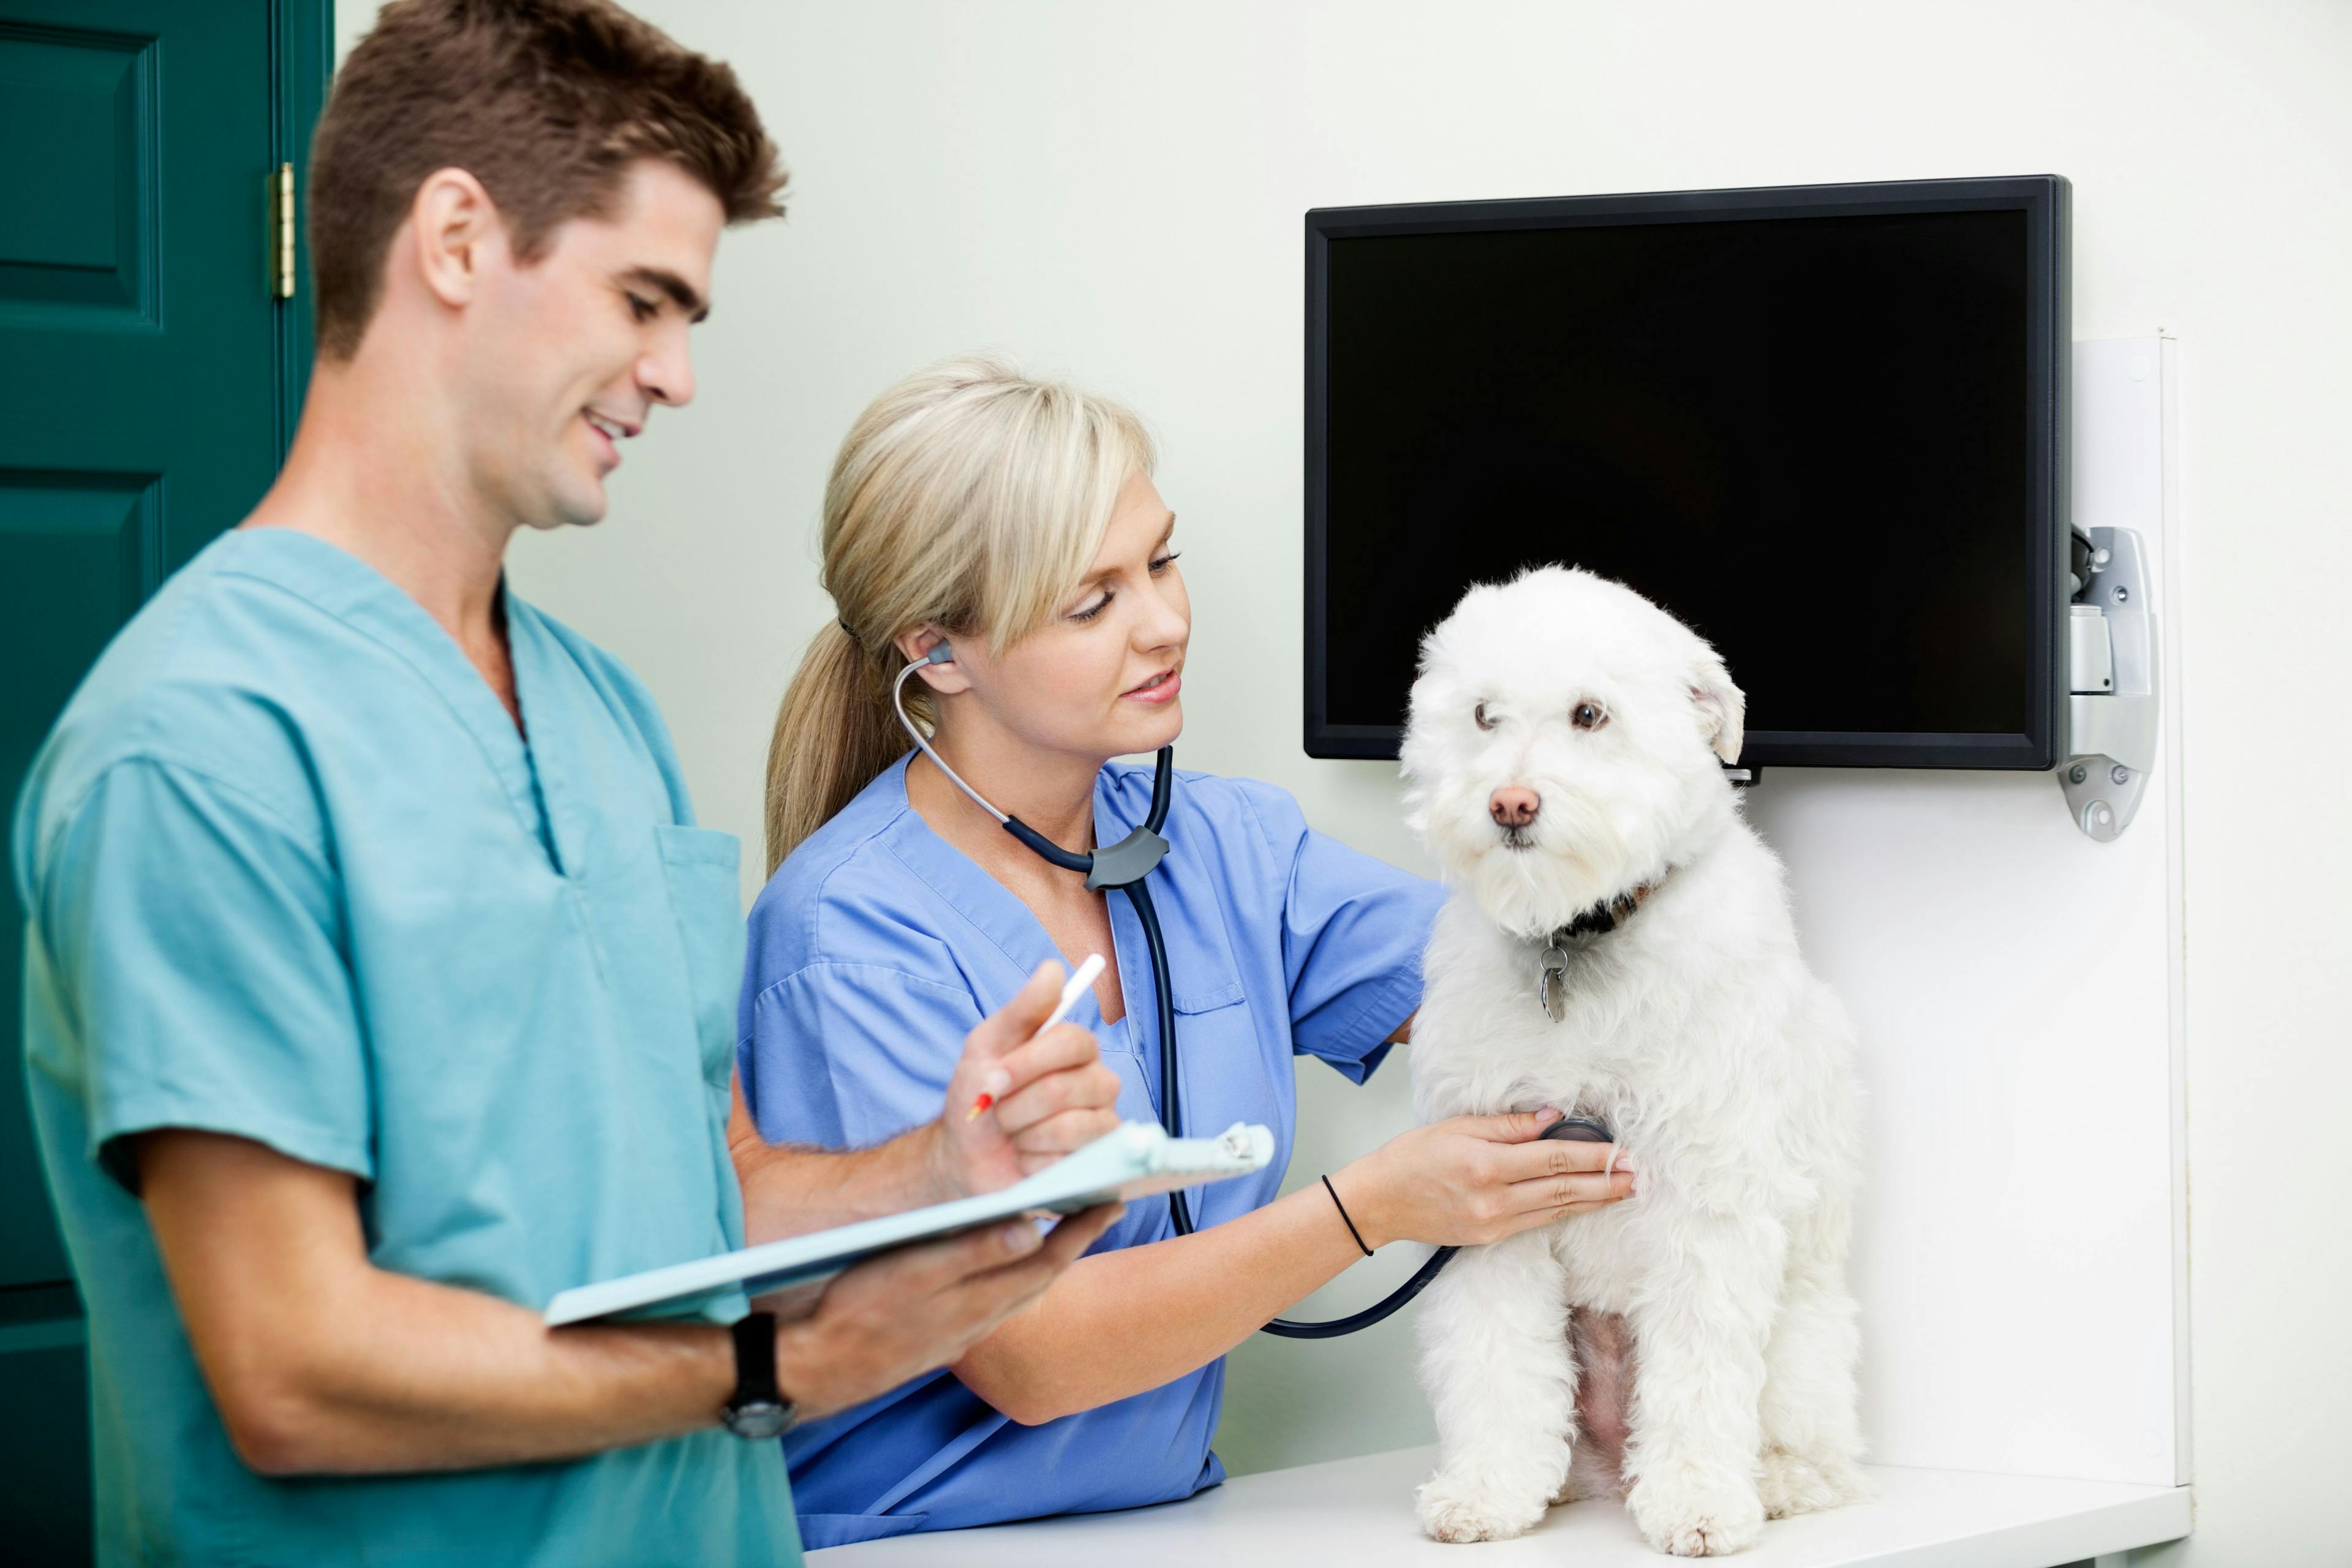 This week on dvm360: A Q&A spotlighting veterinary technicians, plus more veterinary news